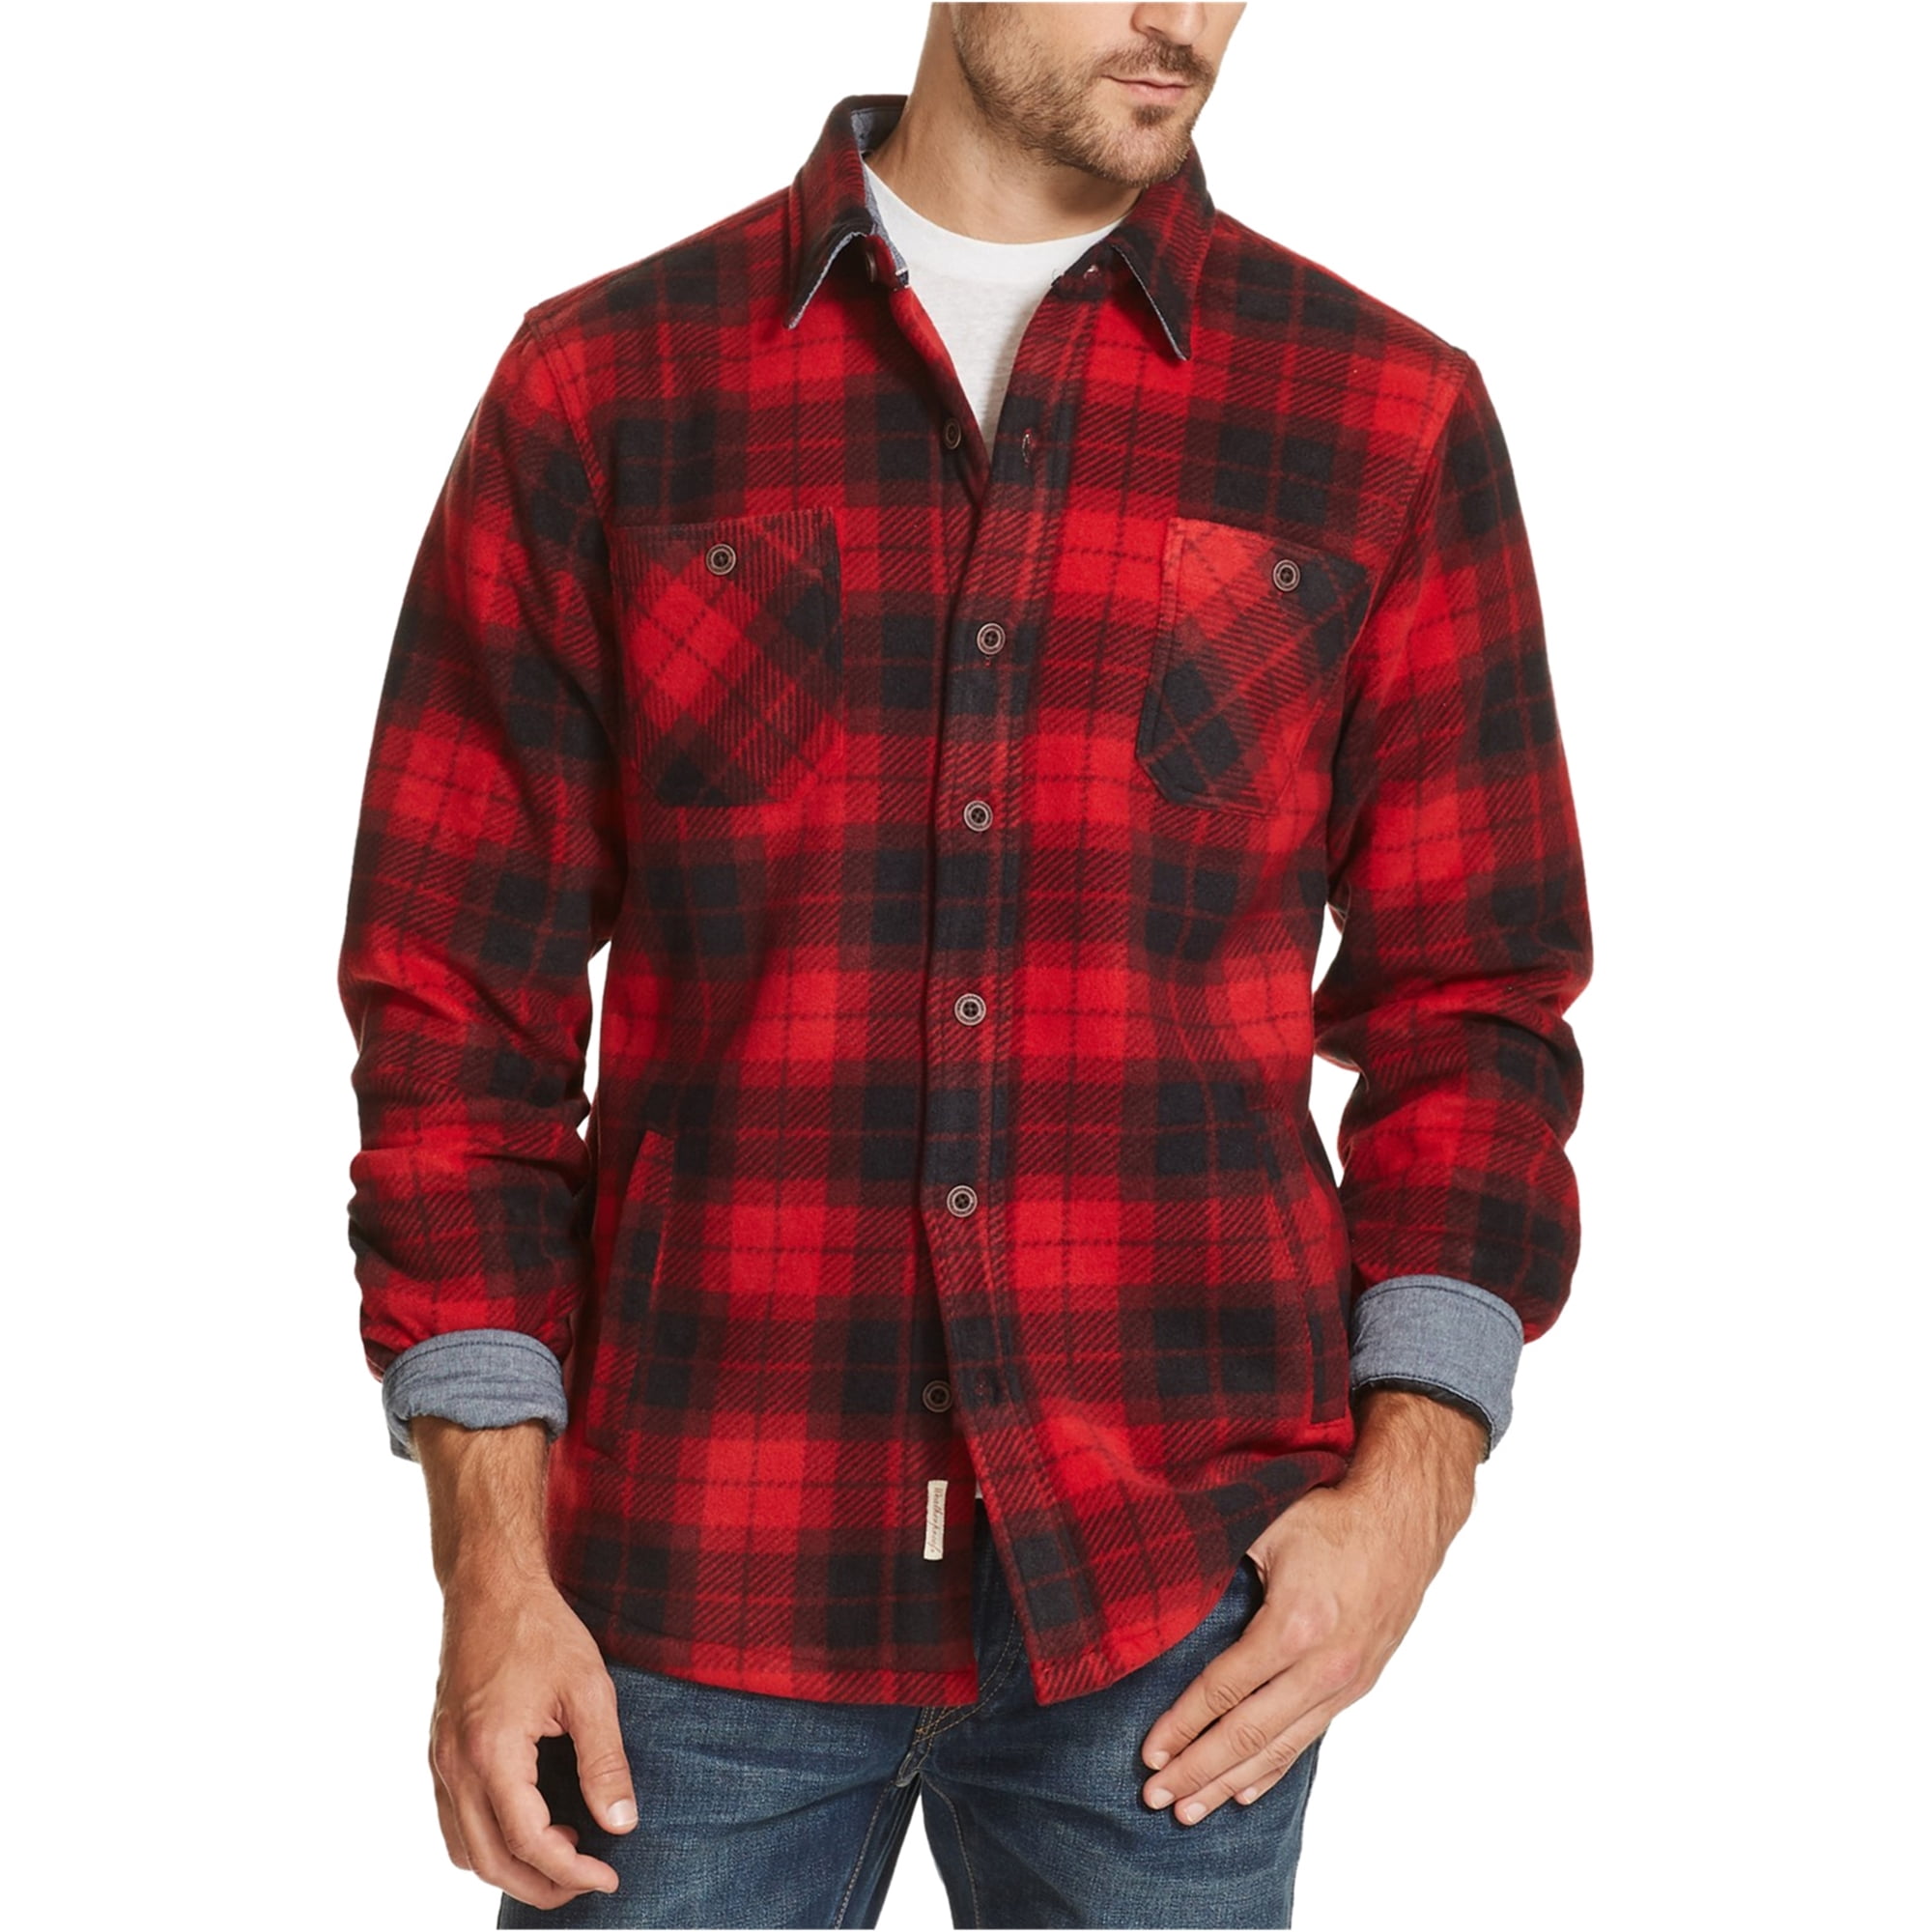 Weatherproof Mens Fleece Lined Shirt Jacket, Red, XXX-Large - Walmart.com